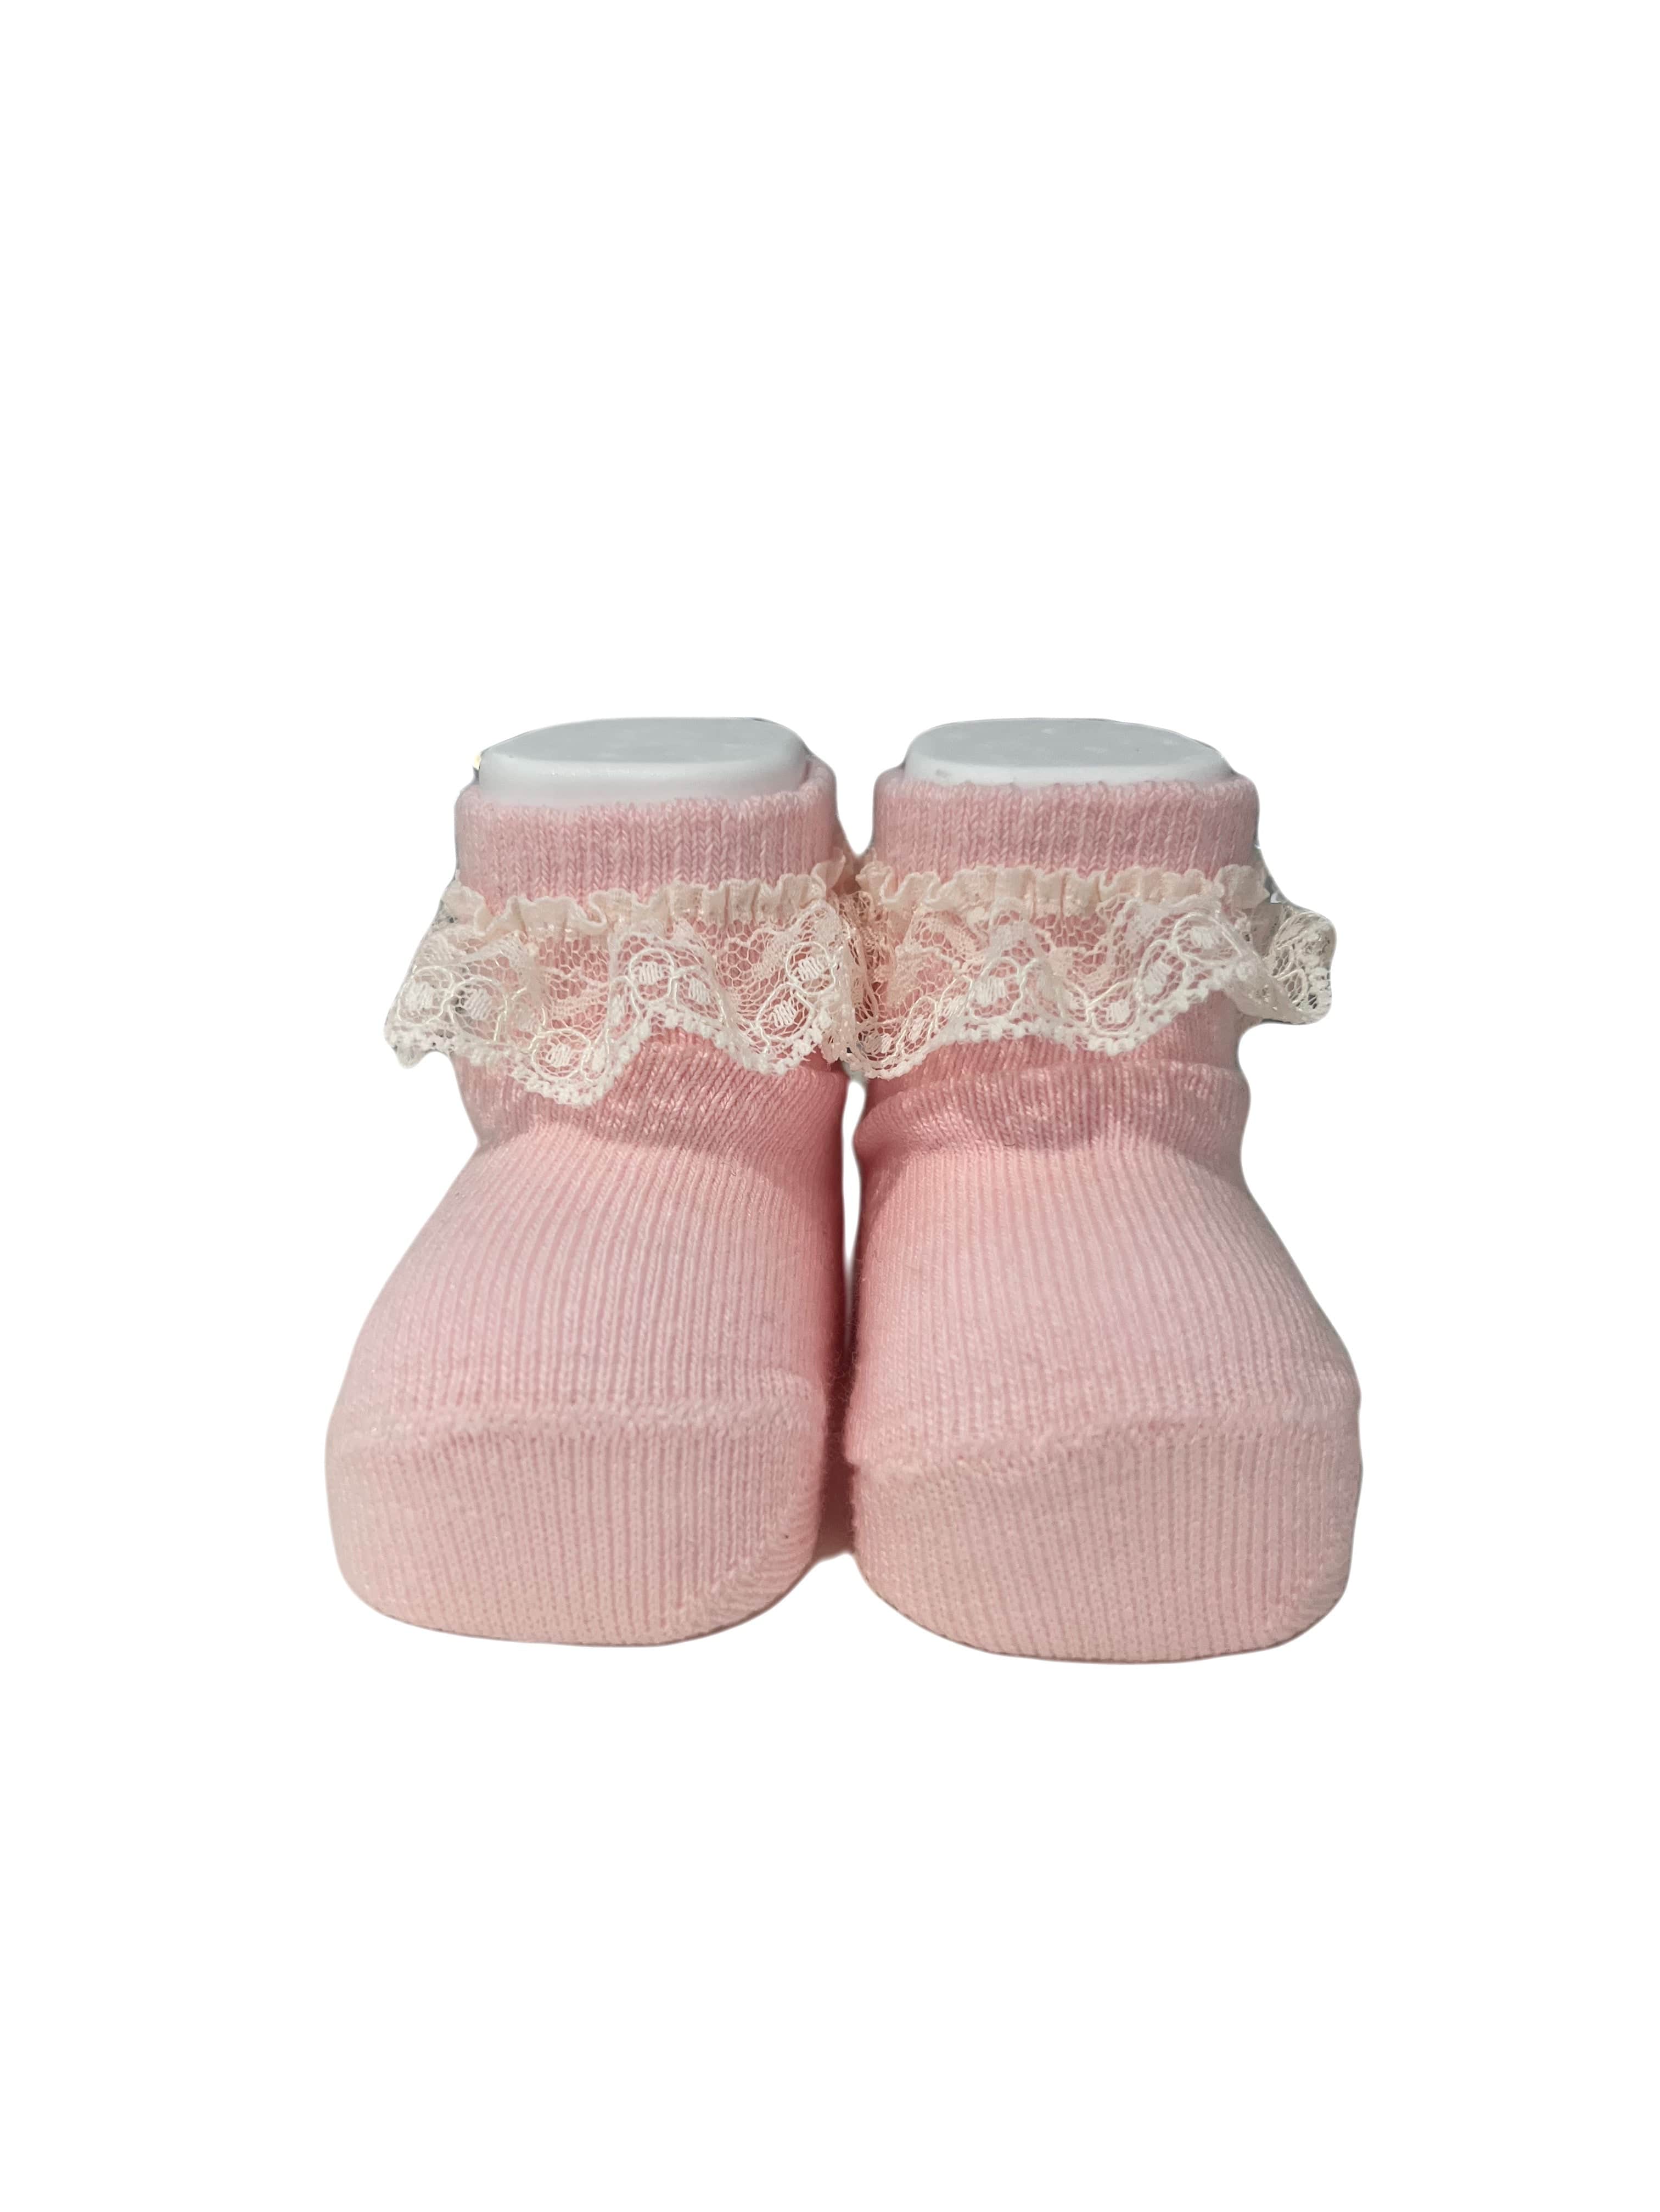 Carlomagno Socks Pale Pink Carlomagno New Born Knitted Cotton Frill Socks